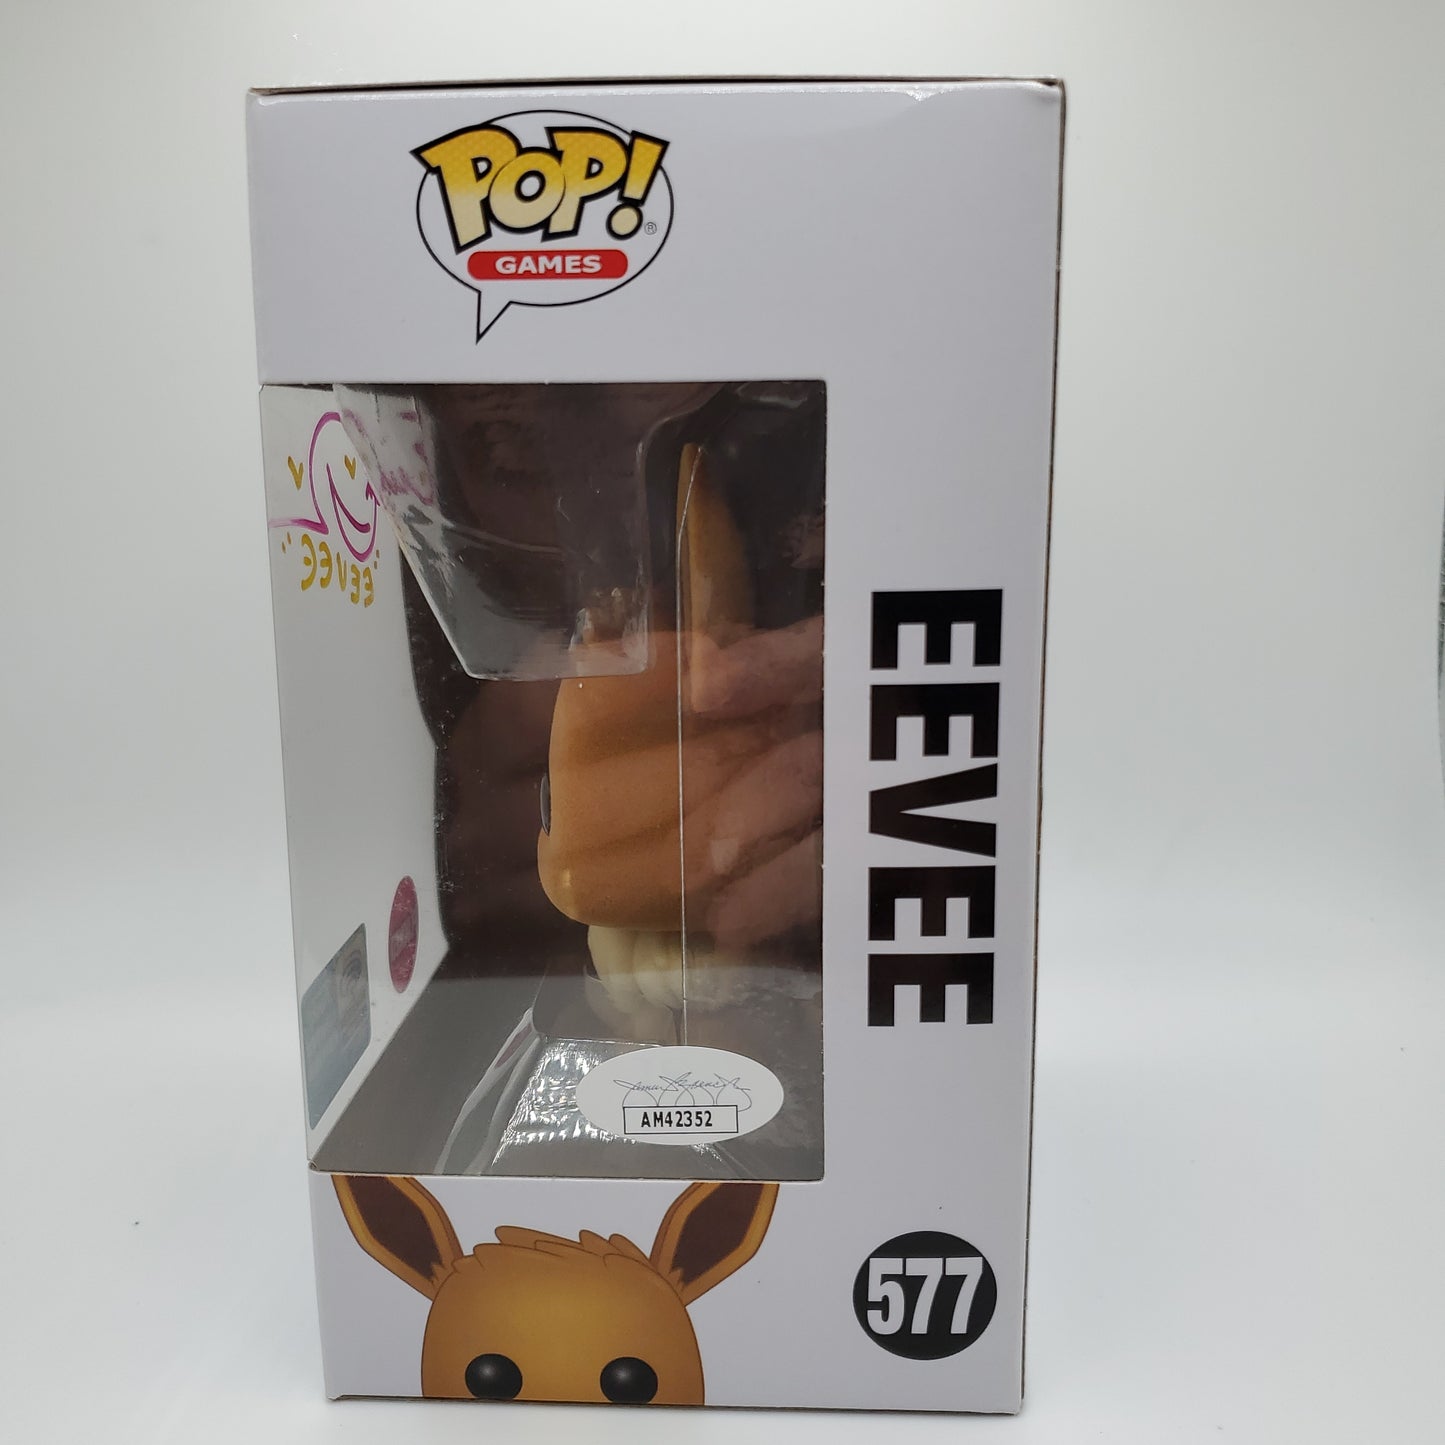 Eevee - 577 - Pokemon - Flocked - Wondrous 2020 - Autographed